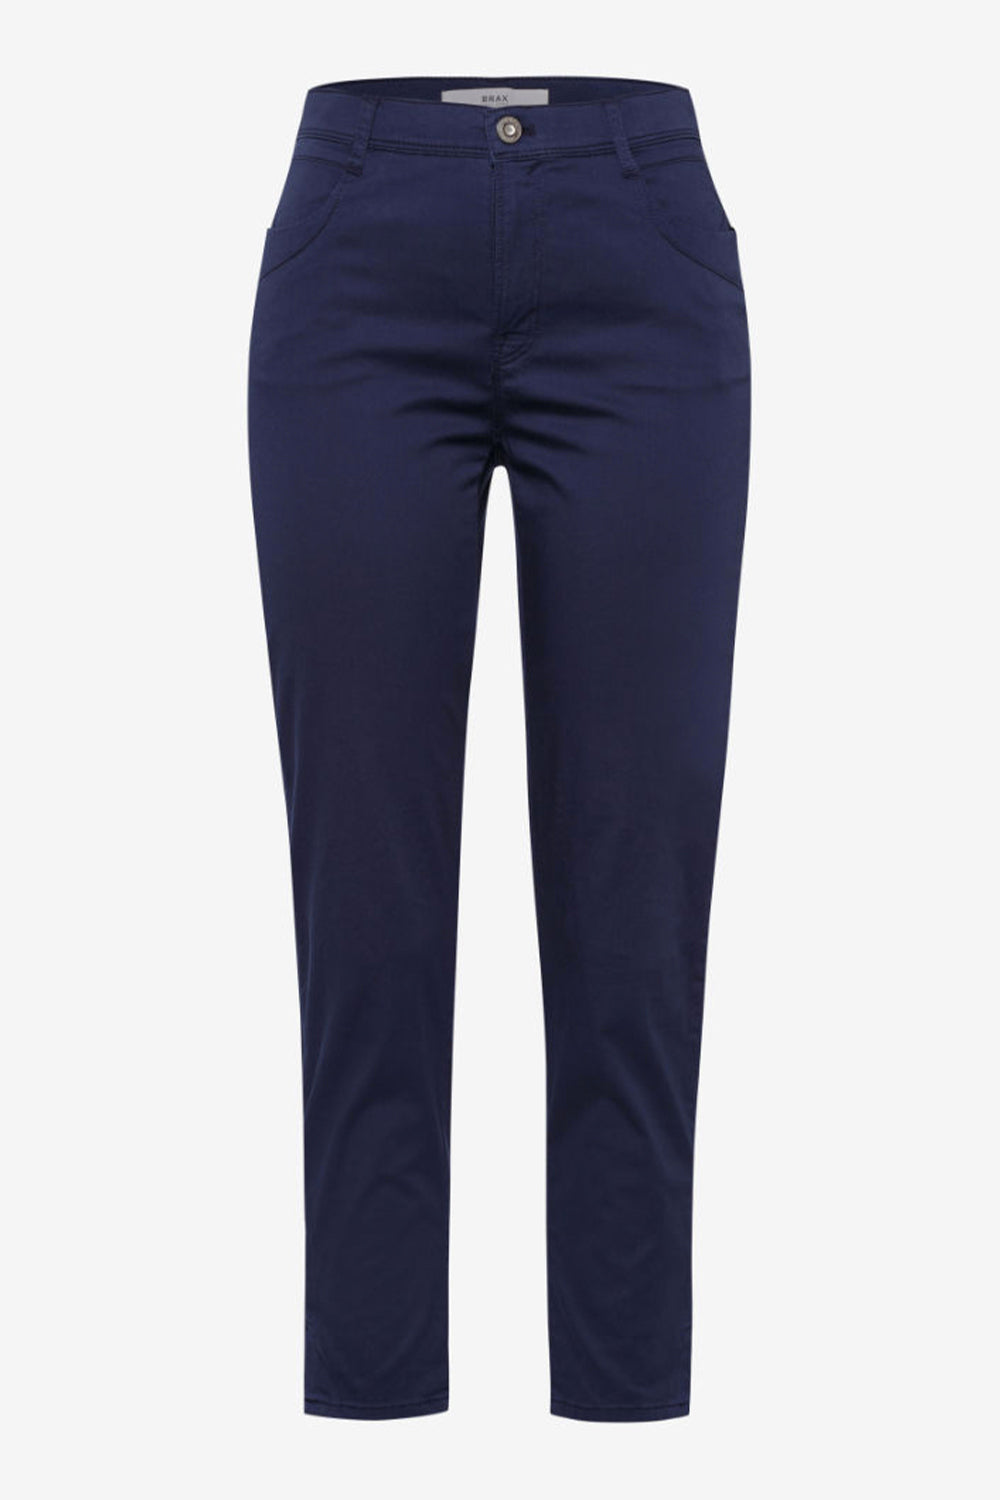 Brax Mary S Five-pocket pants in Ultralight fabric 71-3208